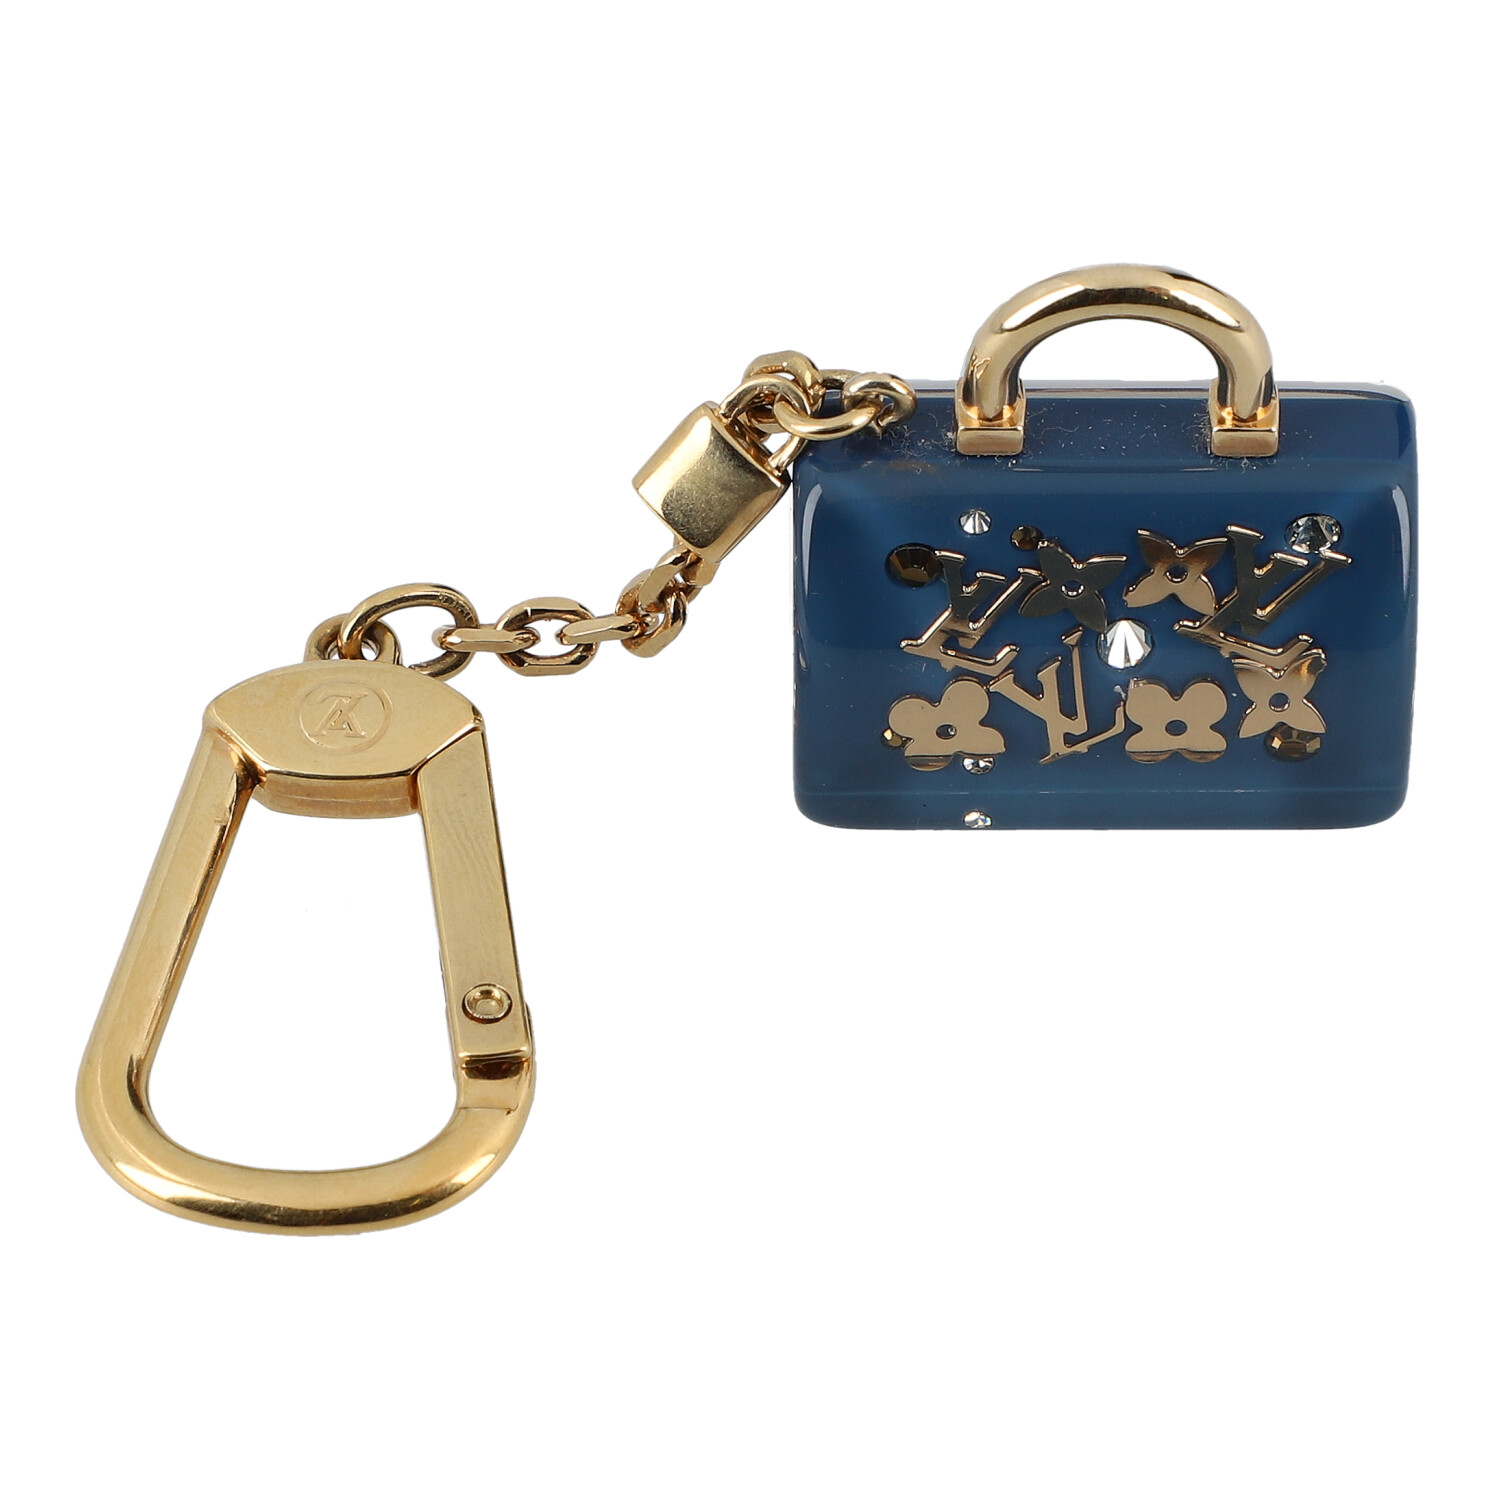 Sold at Auction: Louis Vuitton leopard print monogram handbag, 'Polly Leo'  having original box, dust bag, tags and receipt, new price $3,940.